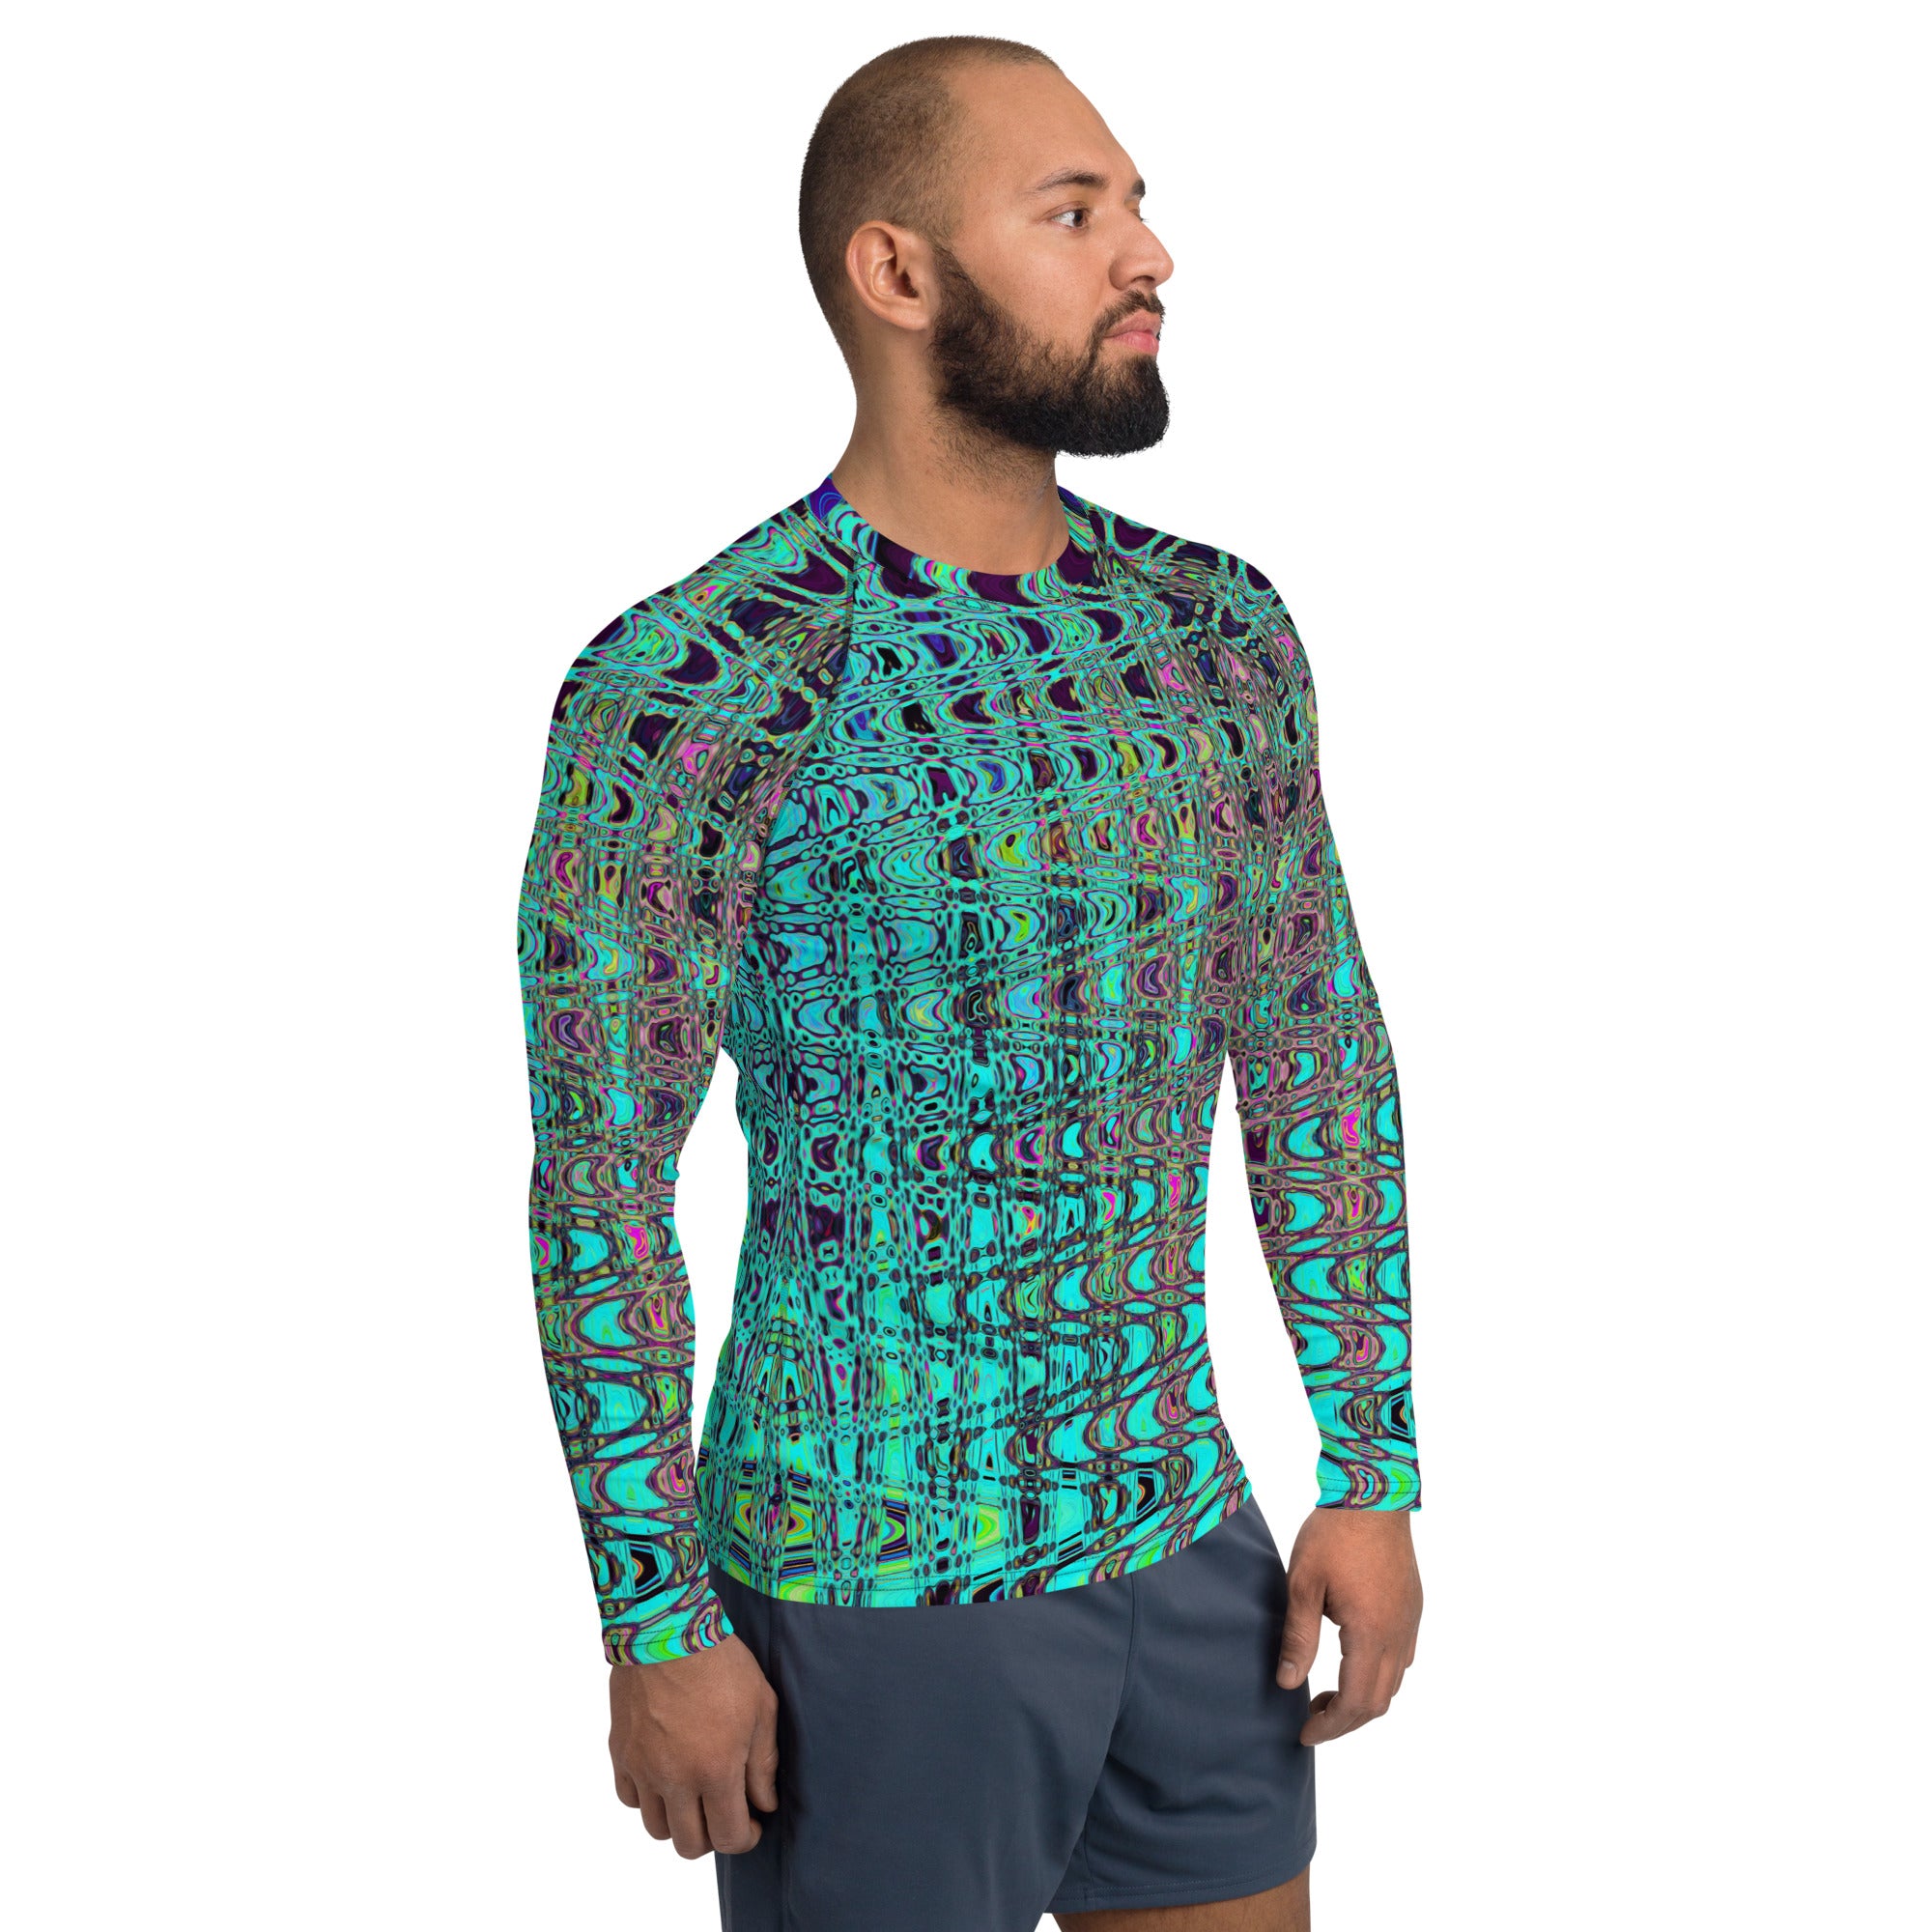 Men's Athletic Rash Guard Shirts | Abstract Kaleidoscopic Aqua Retro Boomerang Waves